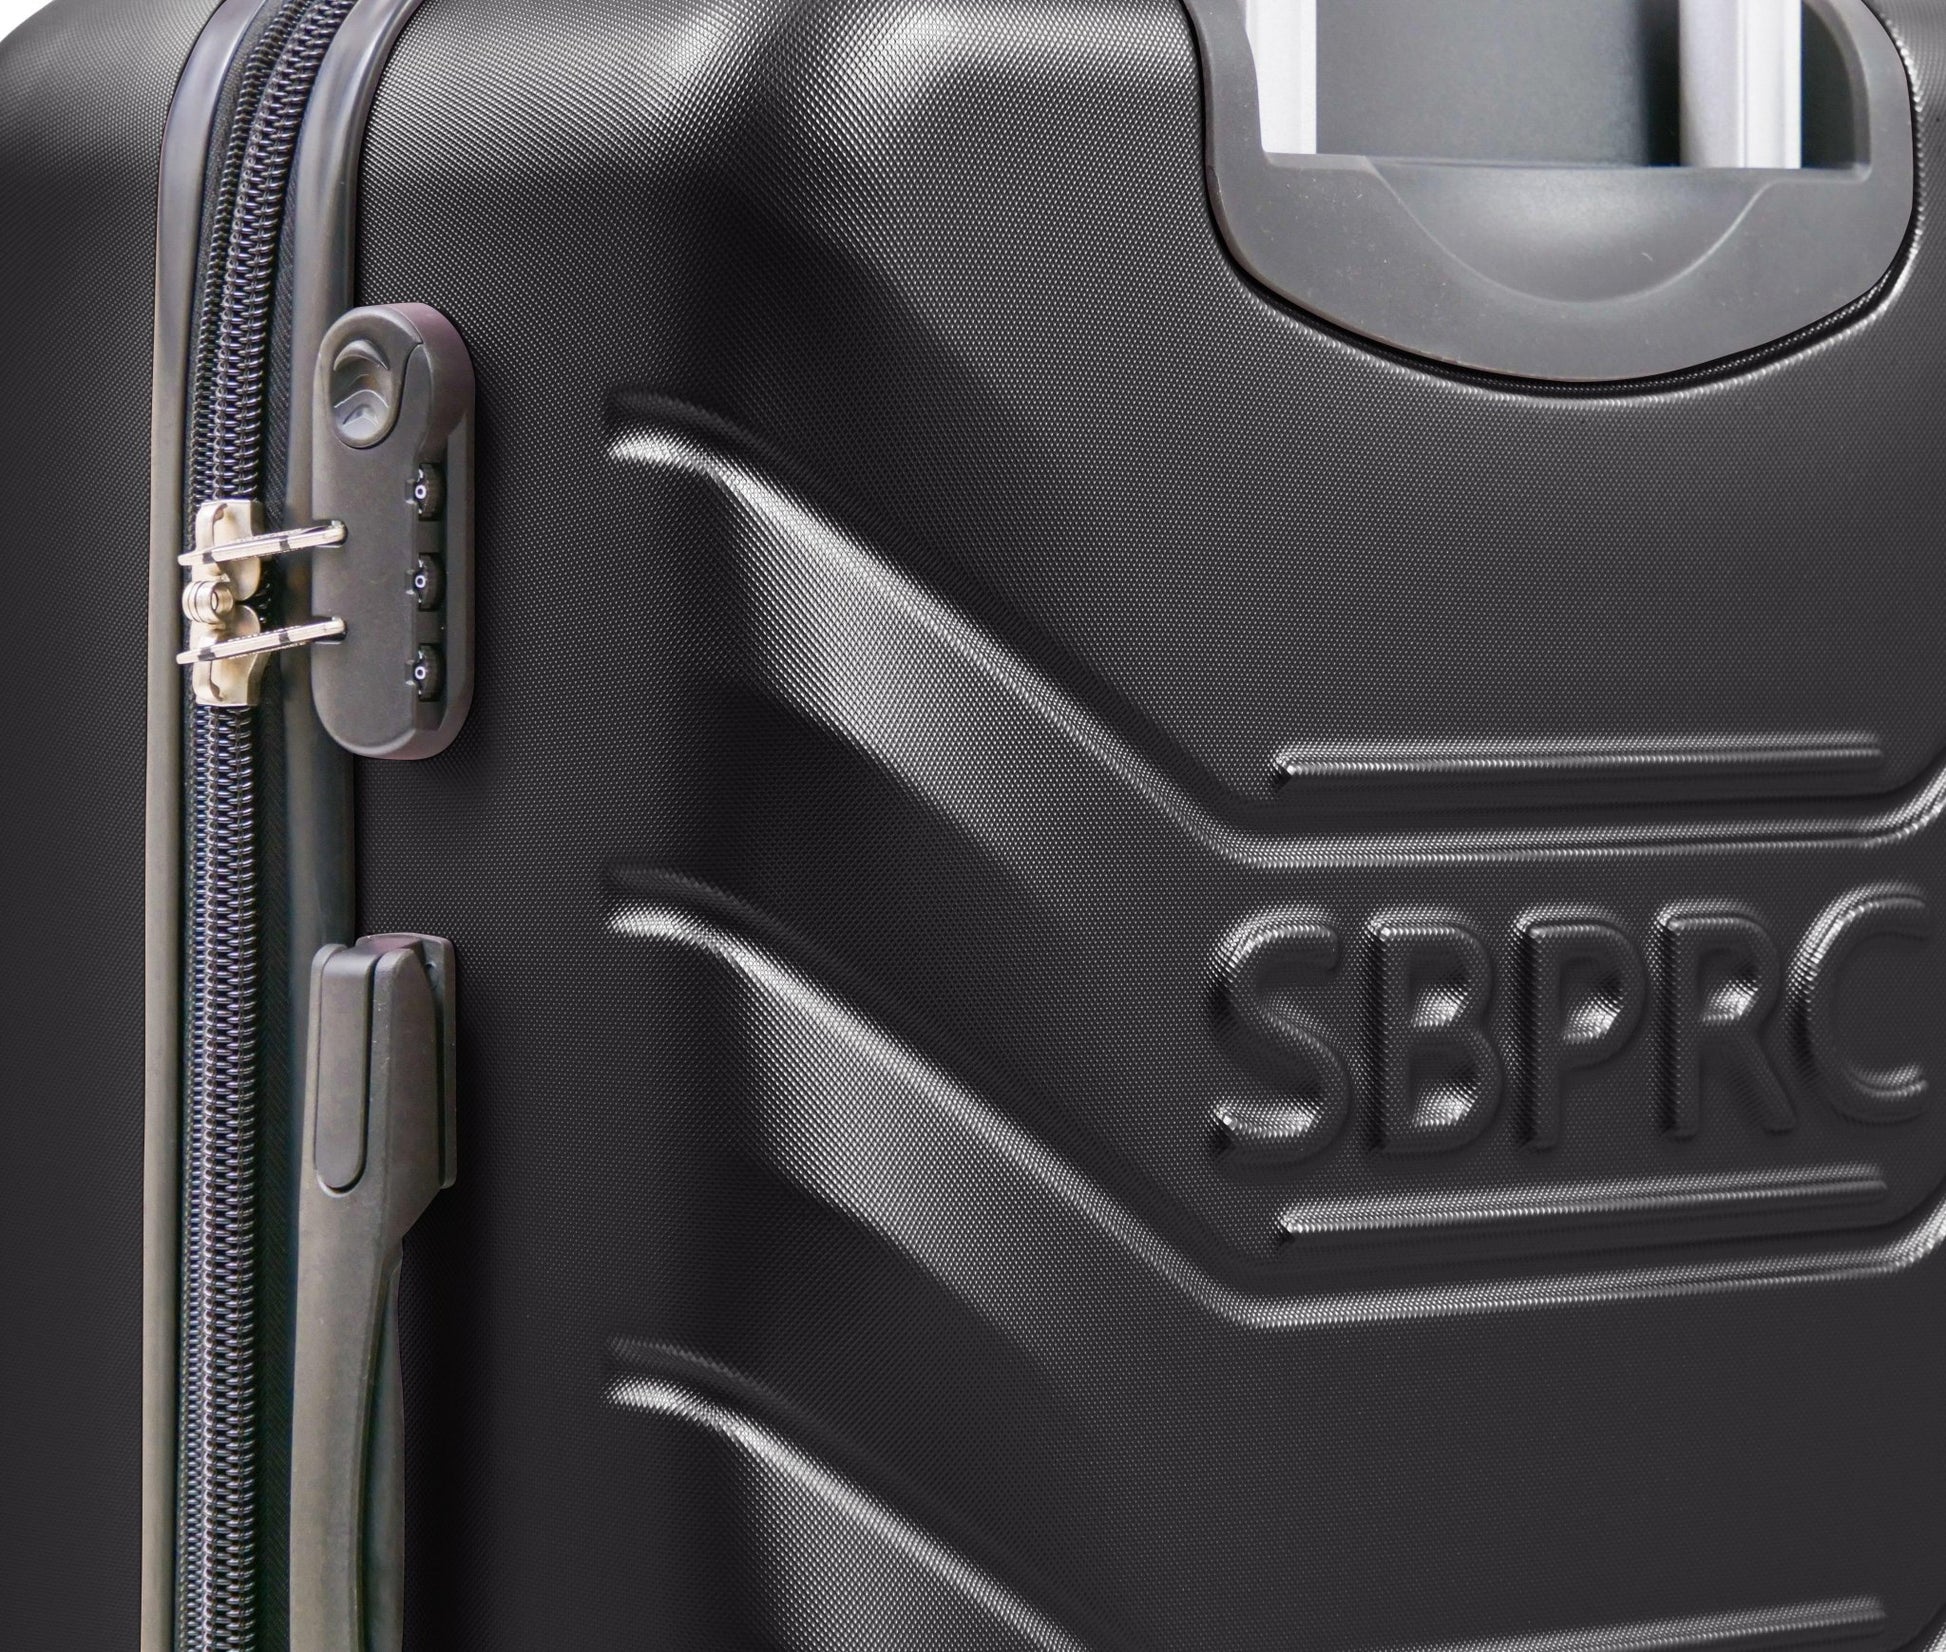 SANTA BARBARA POLO & RAQUET CLUB - מזוודה טרולי עלייה למטוס 20" דגם 1701 בצבע שחור - MASHBIR//365